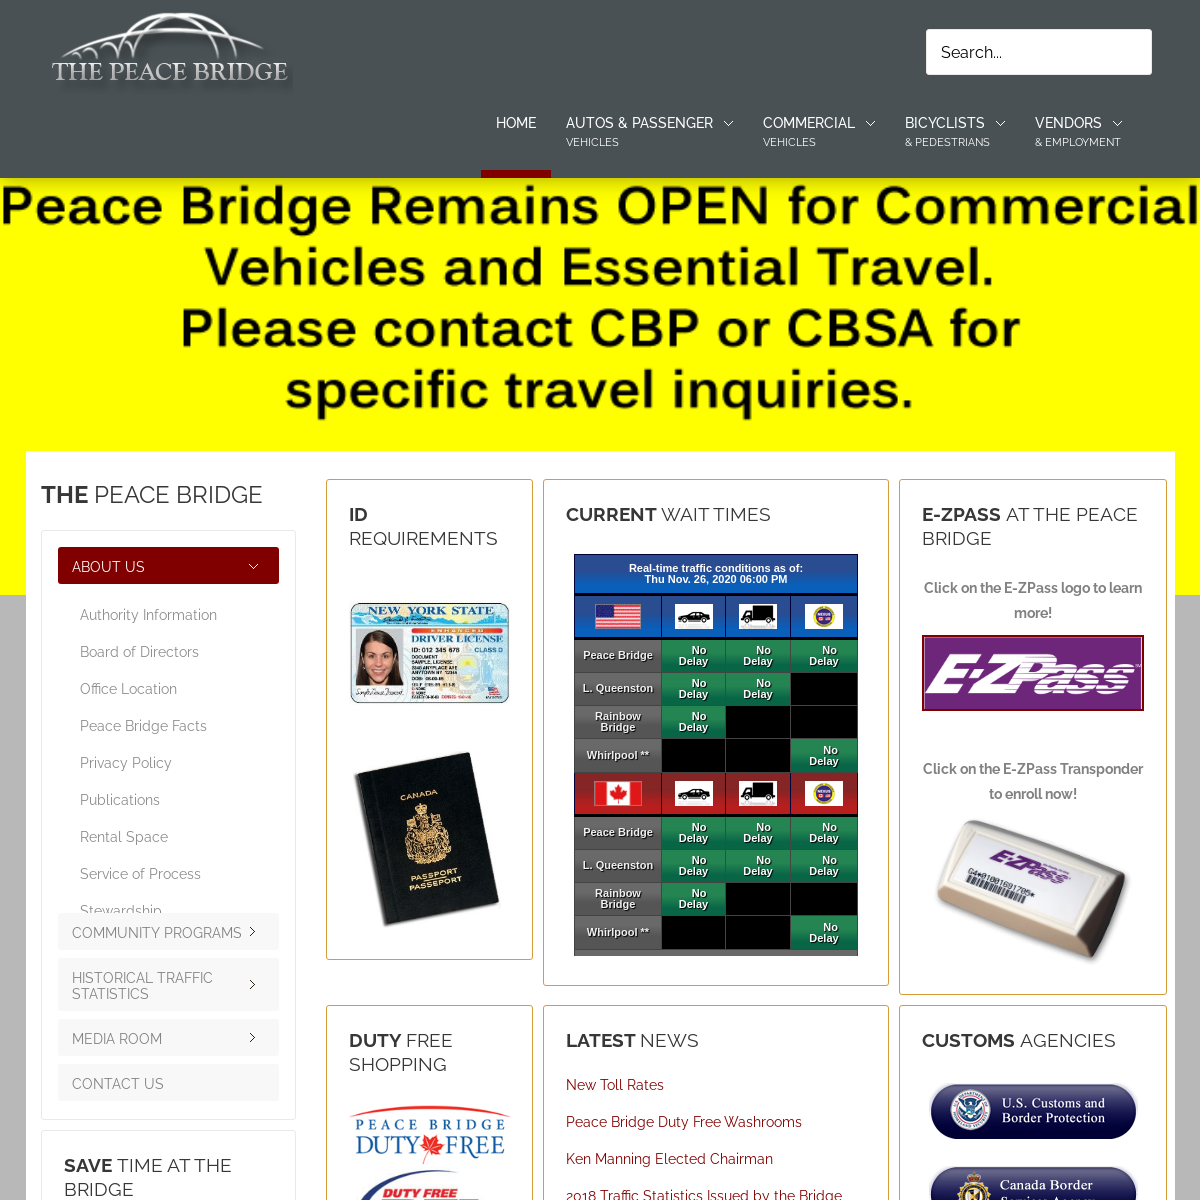 A complete backup of peacebridge.com